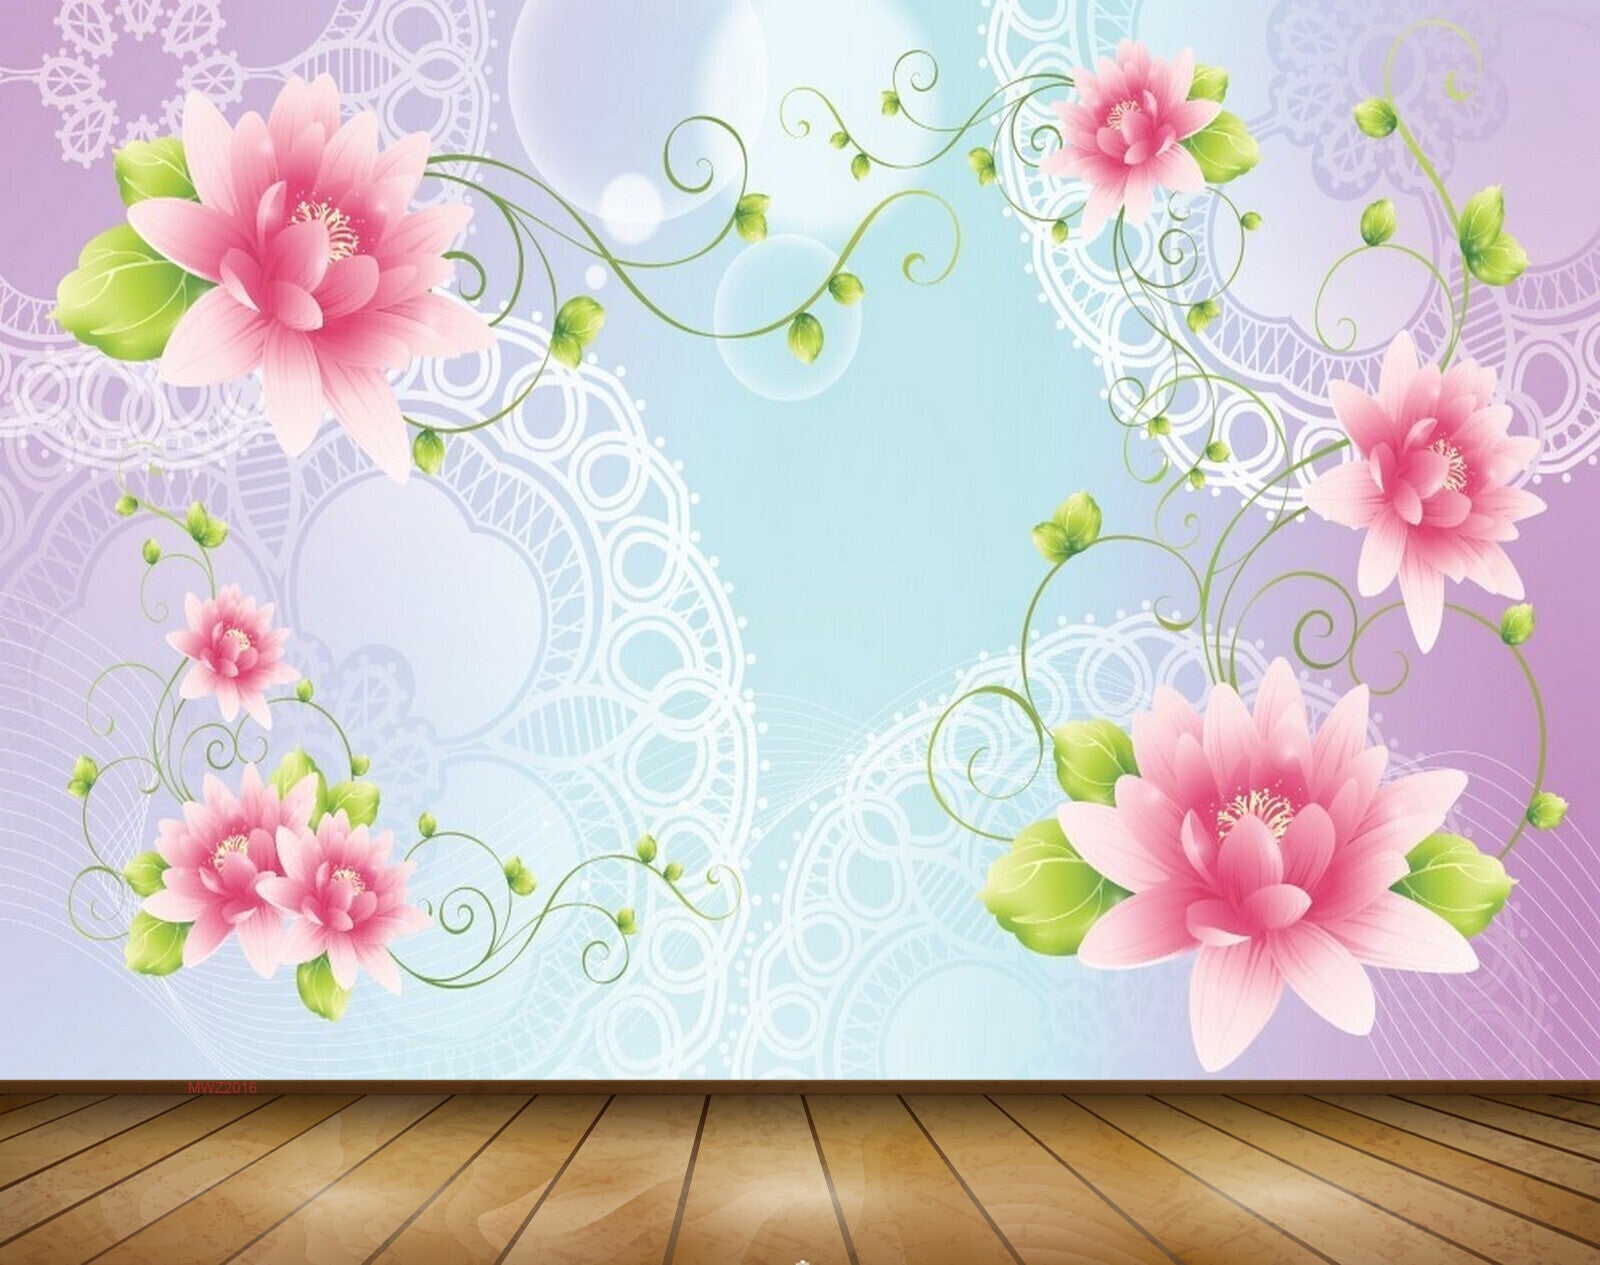 Avikalp MWZ2016 White Pink Lotus Flowers 3D HD Wallpaper